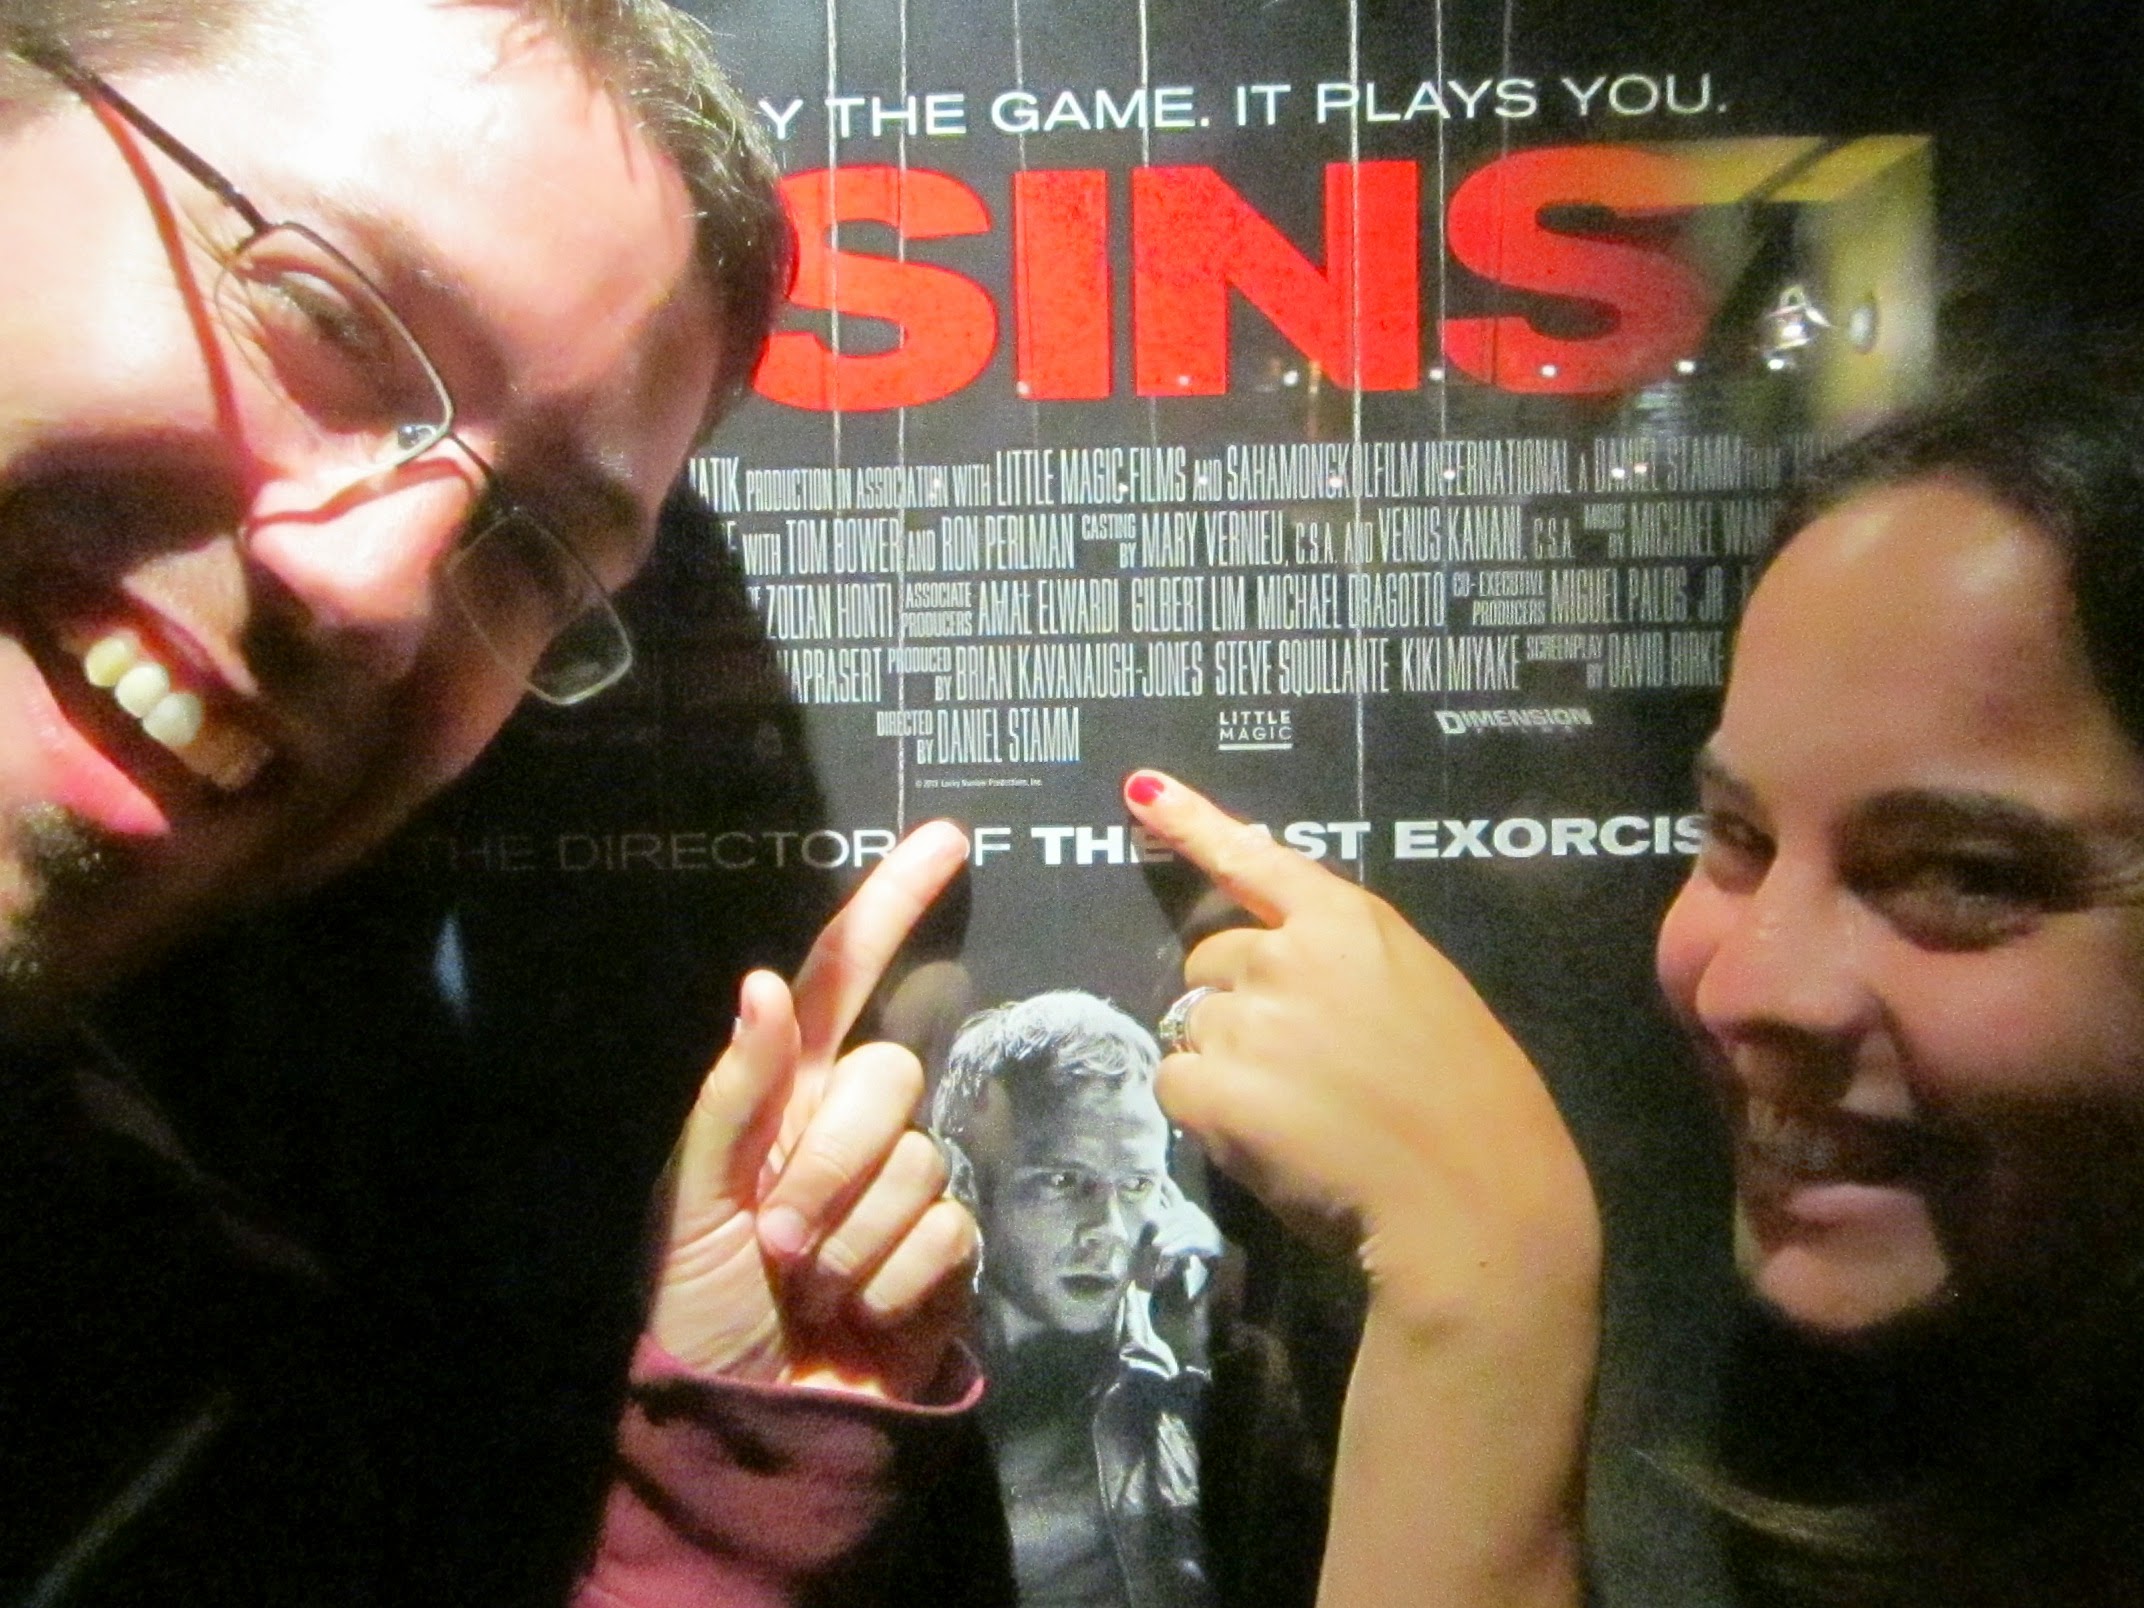 13 Sins Pics, Movie Collection